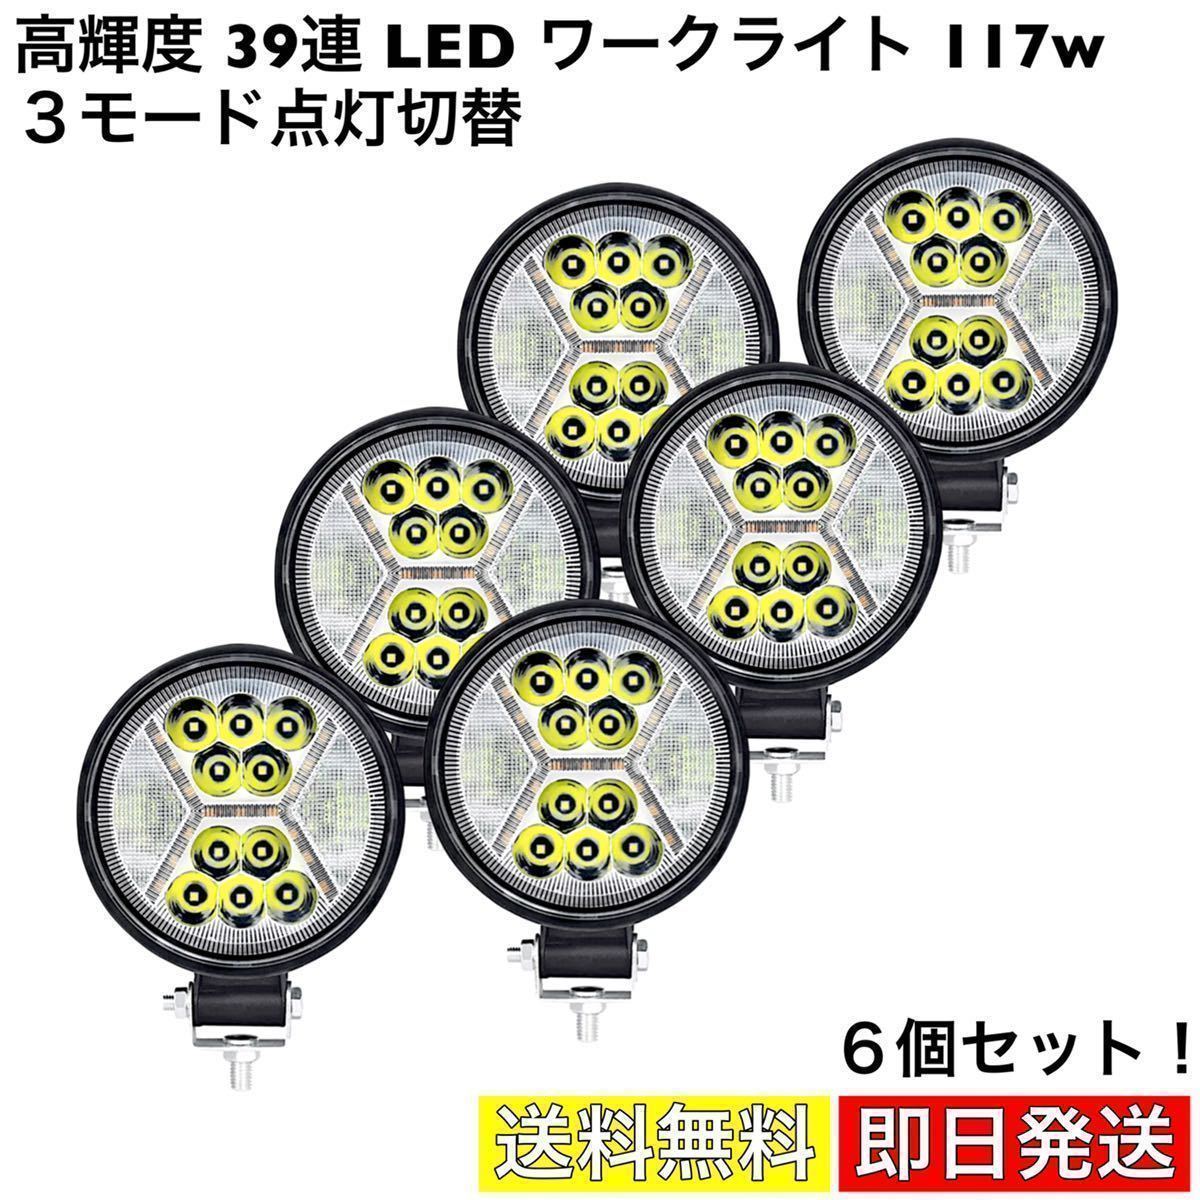 LED ワークライト 117w 高輝度 39連 作業灯 前照灯 車幅灯 投光器